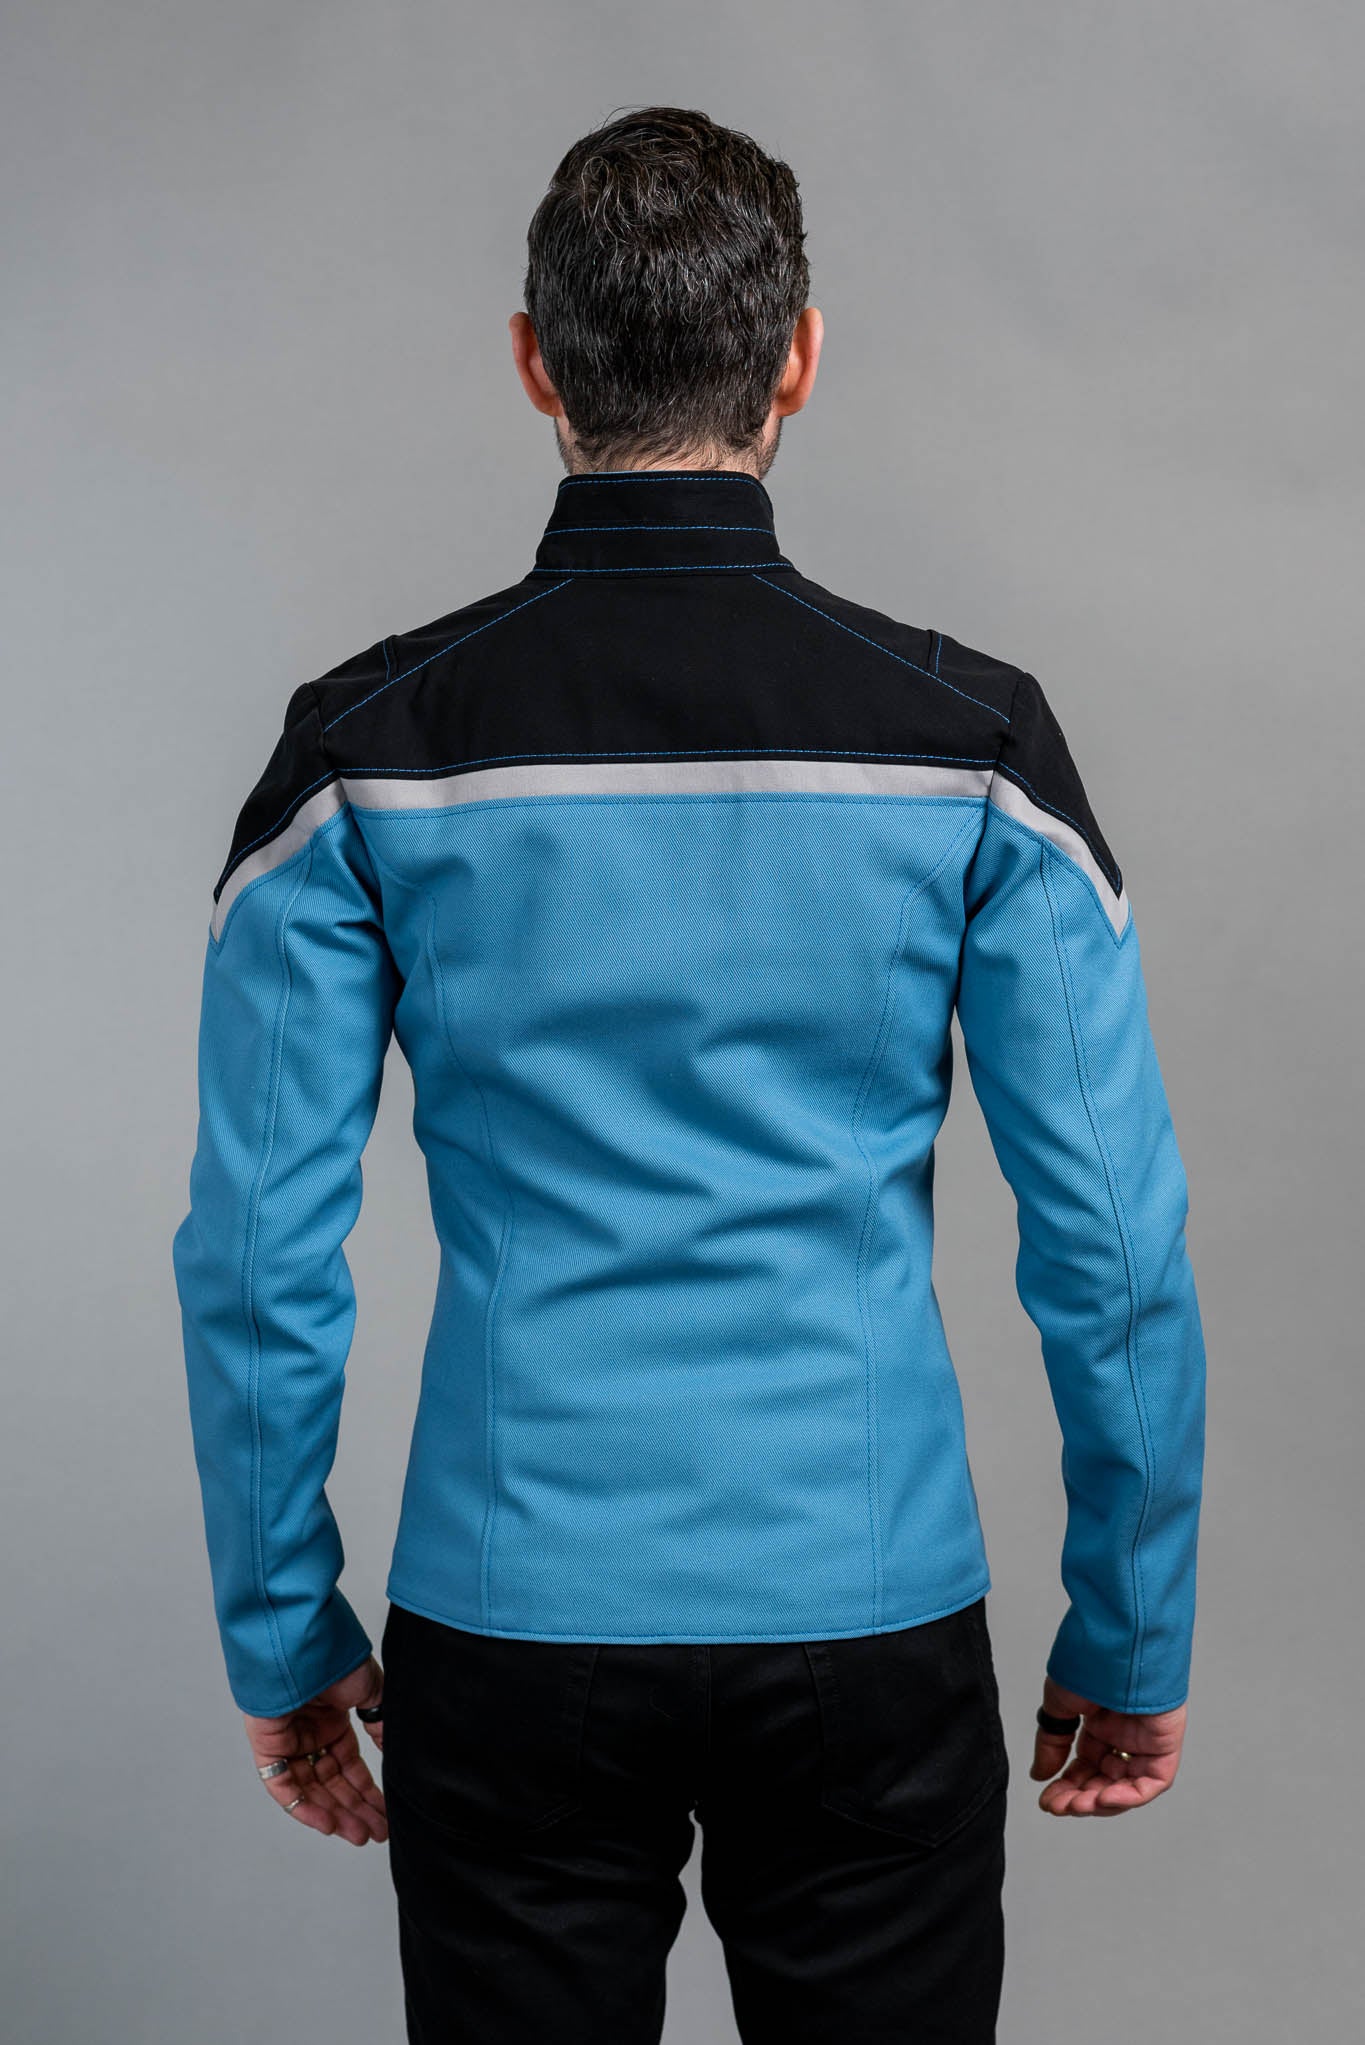 Starfleet 2380 - Sciences Blue [Mens]